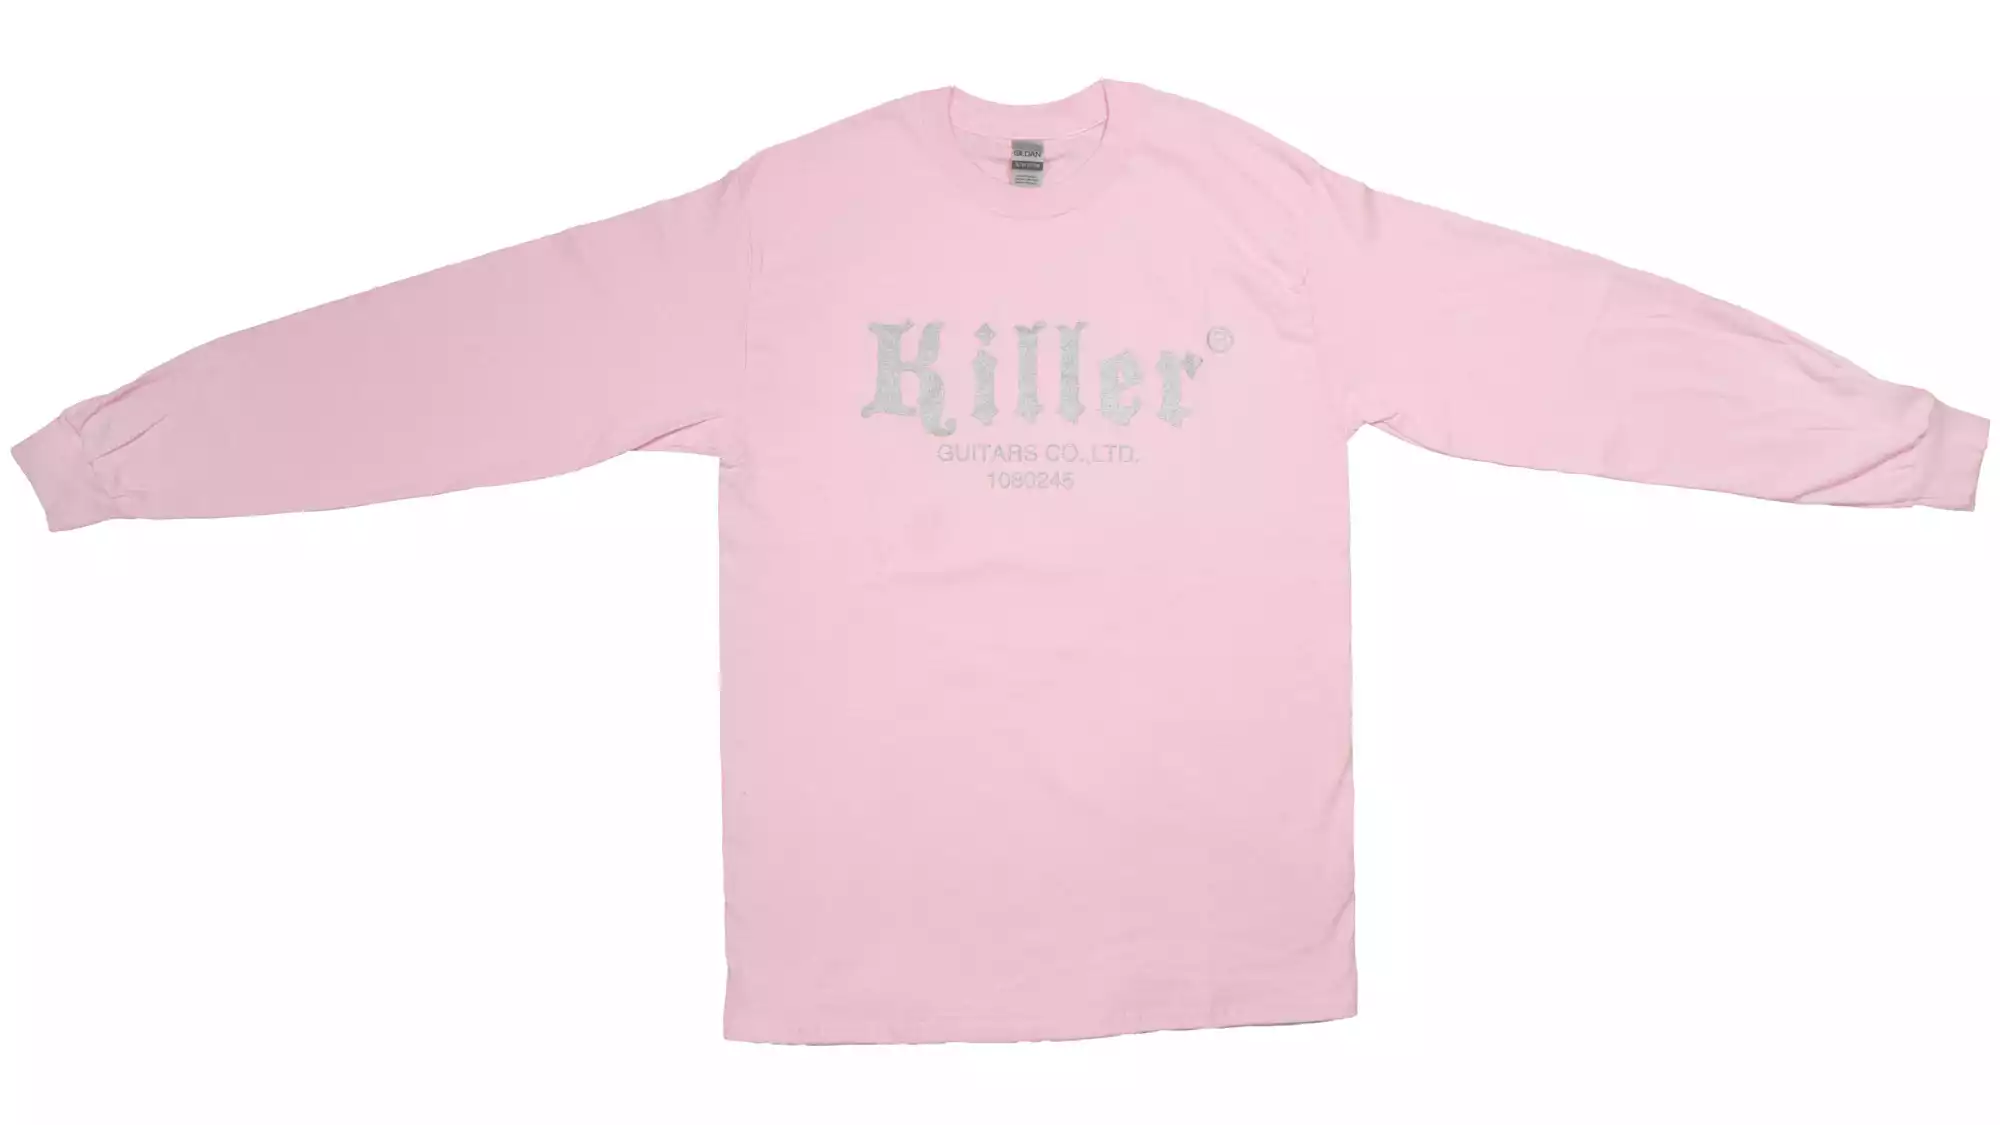 killer guitars t-shirt long sleeve  light pink silver logo image